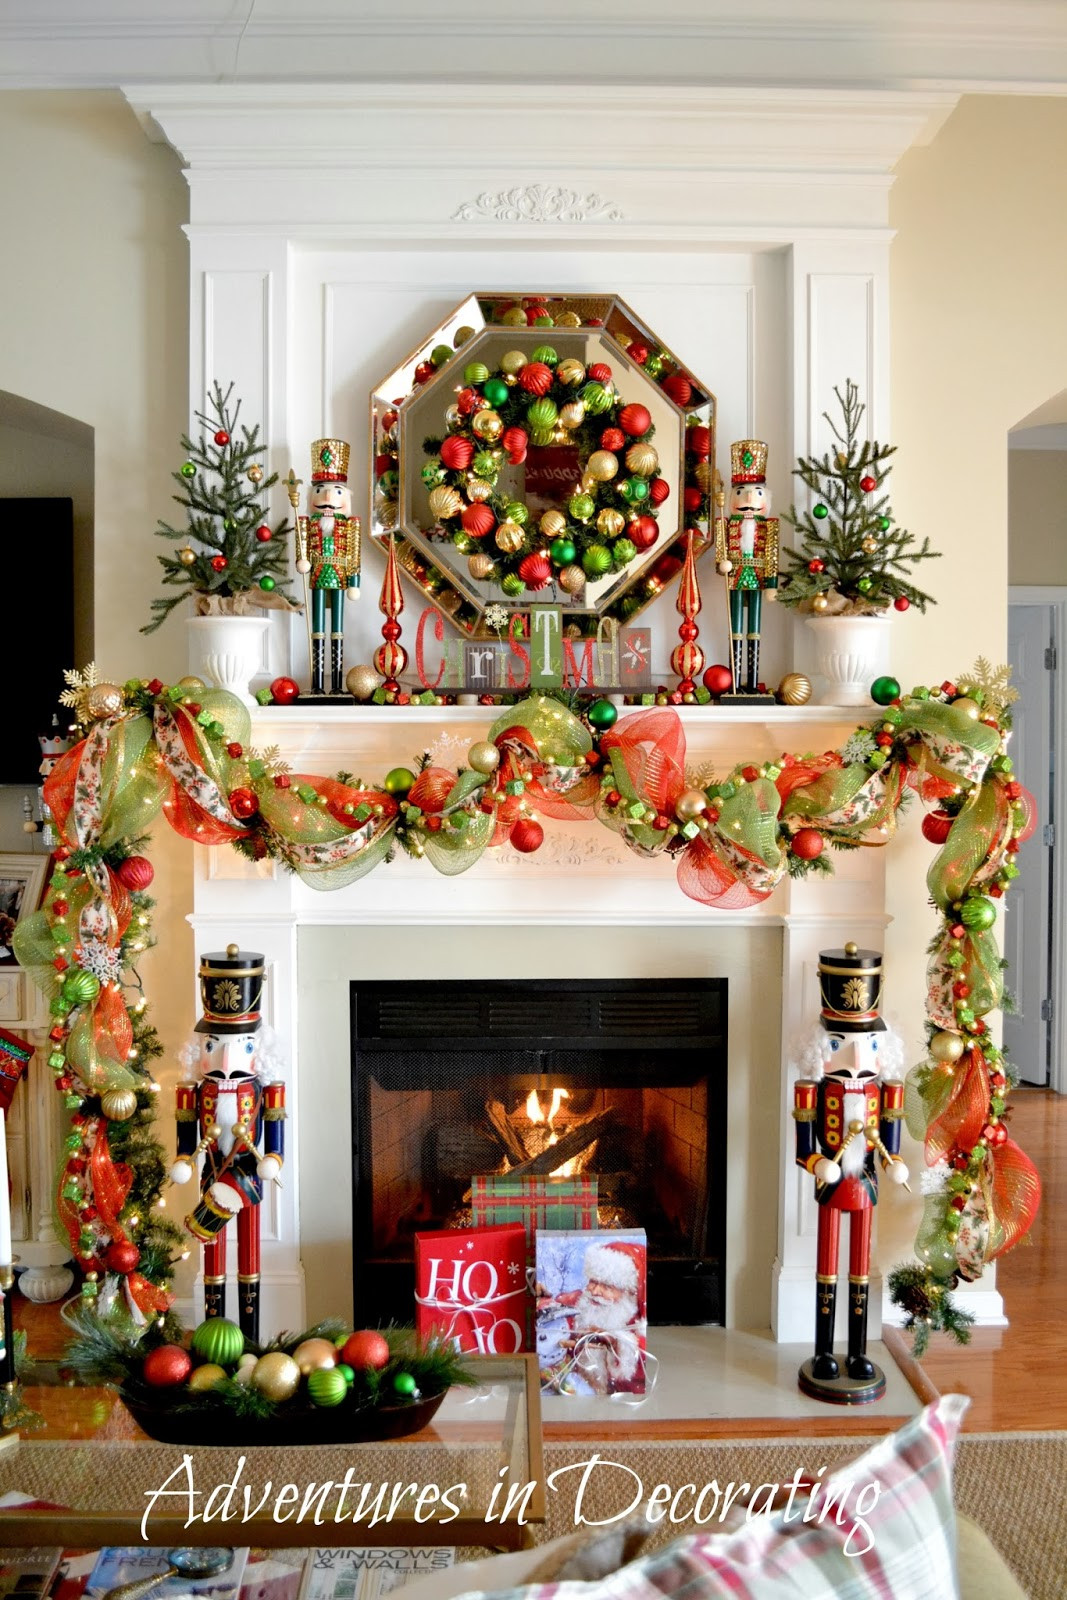 Fireplace Mantel Christmas Decorations
 Adventures in Decorating Our Christmas Mantel and "Deck